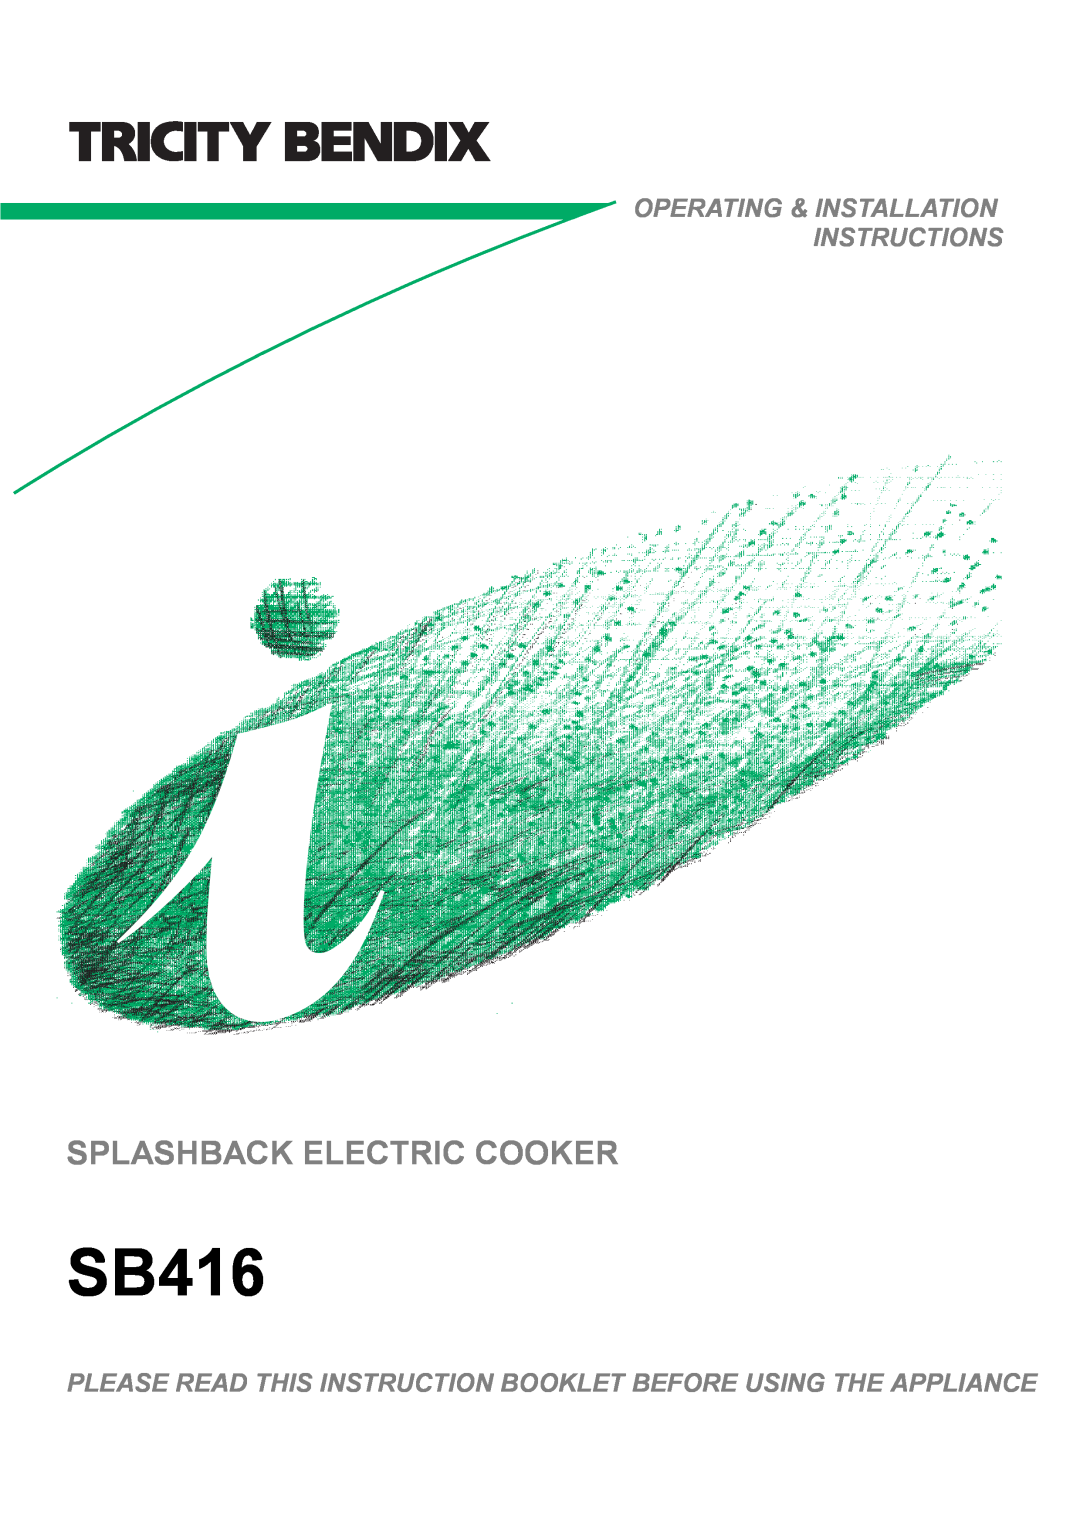 Tricity Bendix SB416 installation instructions Splashback Electric Cooker, Operating & Installation Instructions 